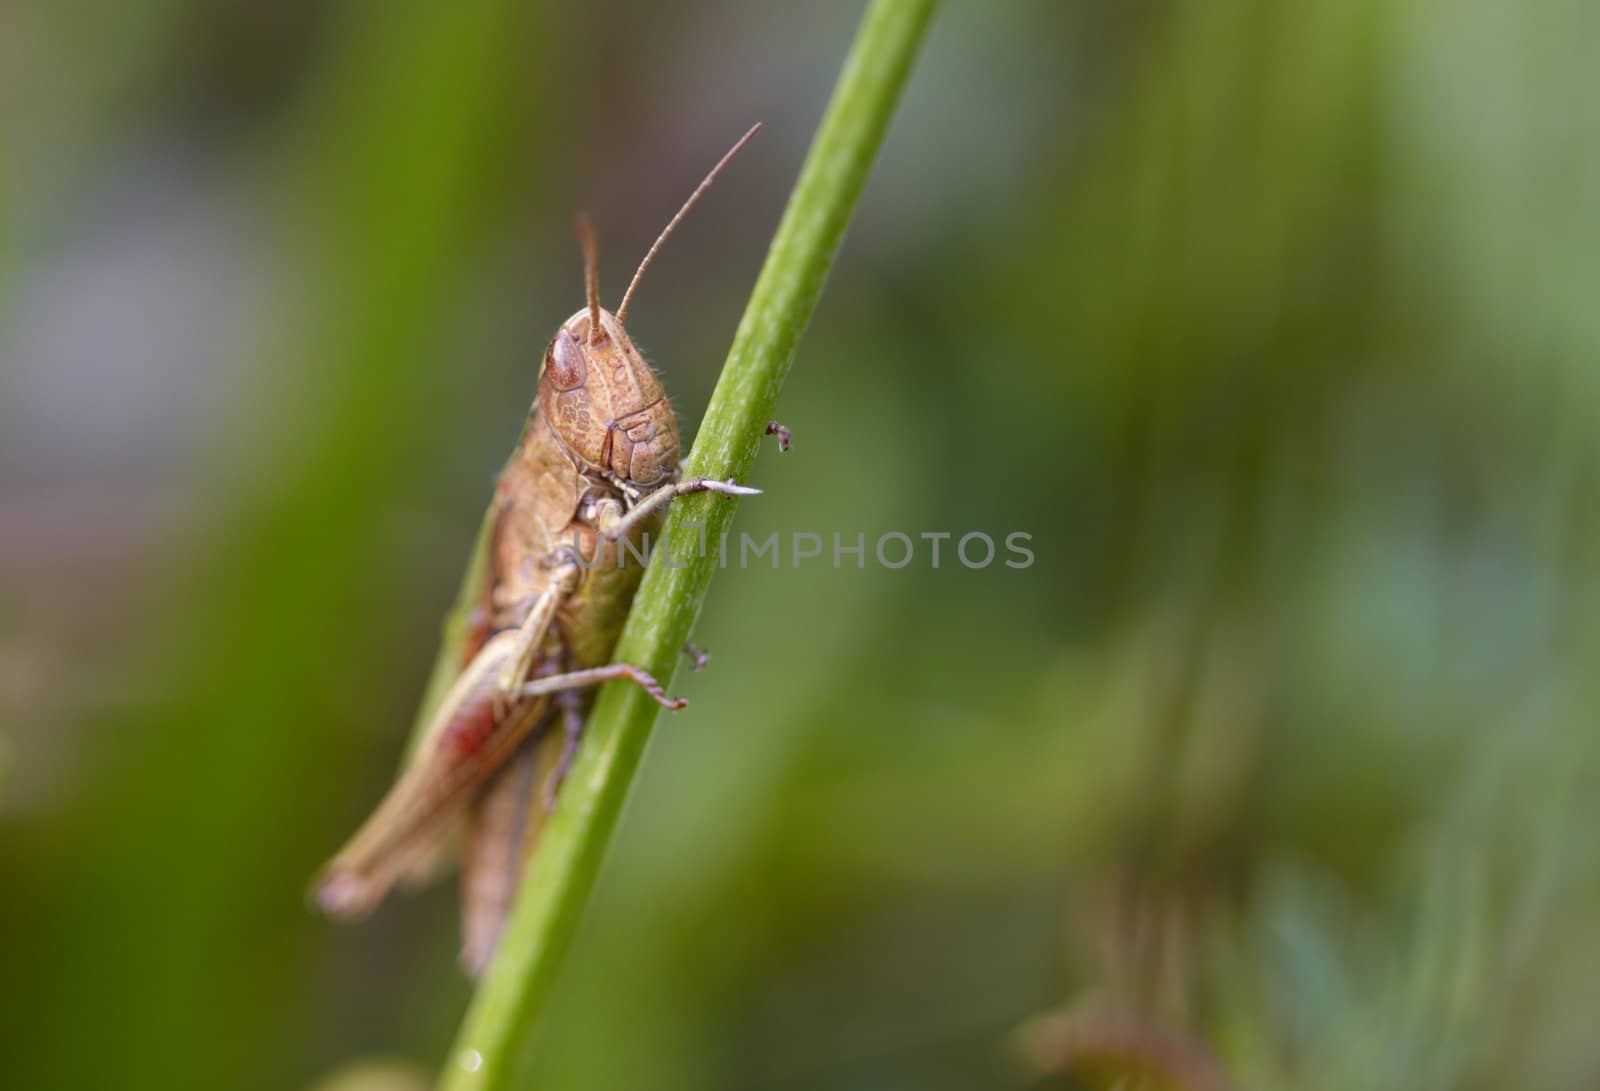 Grasshopper on the blade of grass